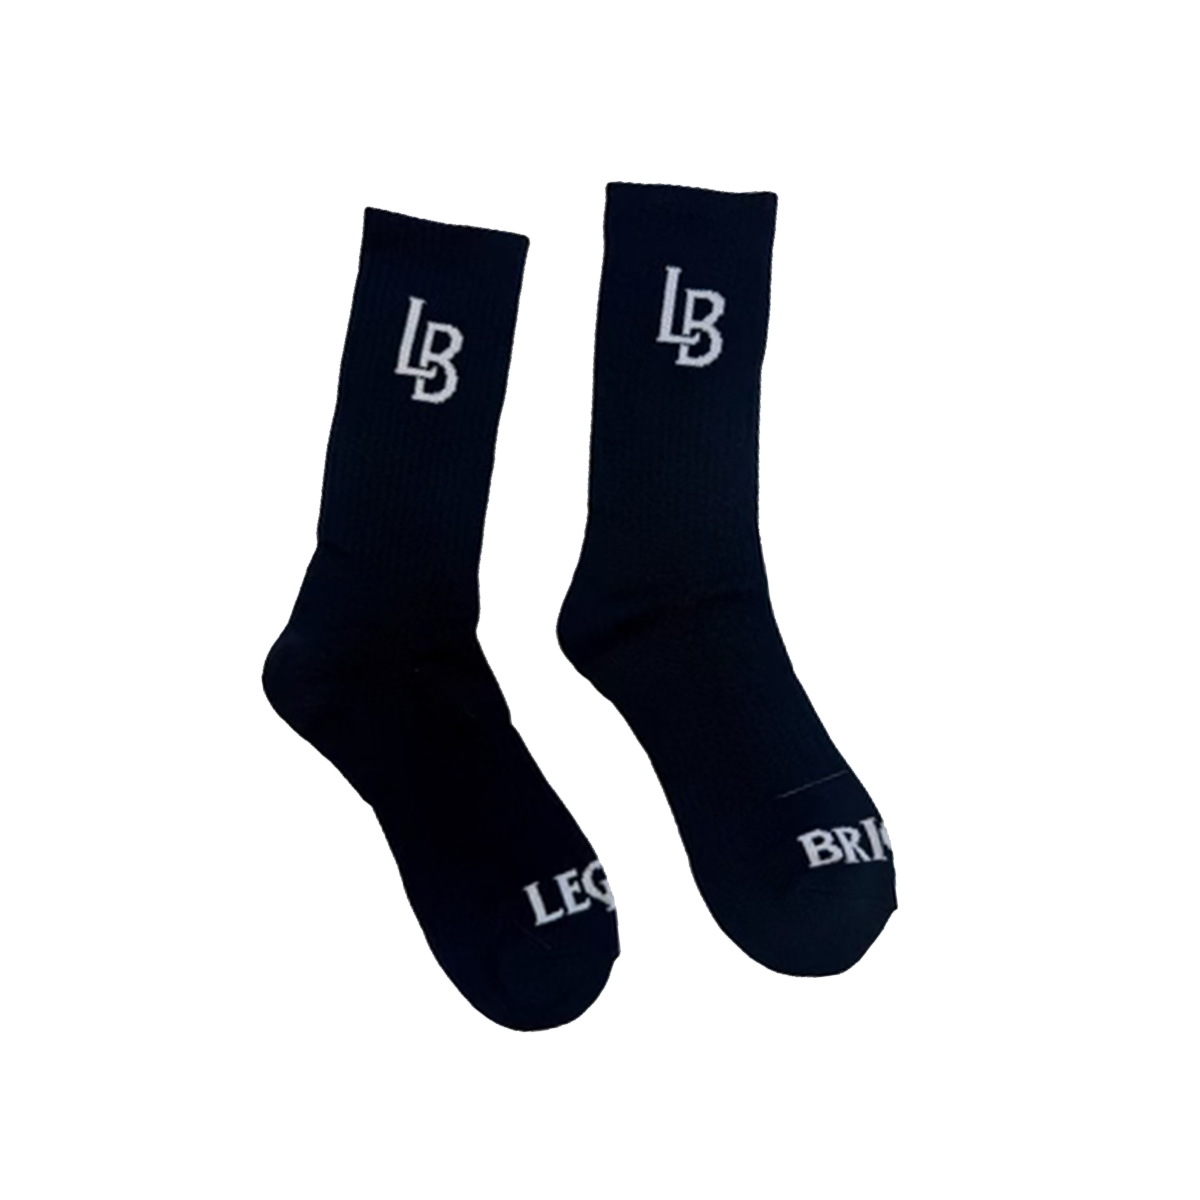 Legal bricks socks “black”